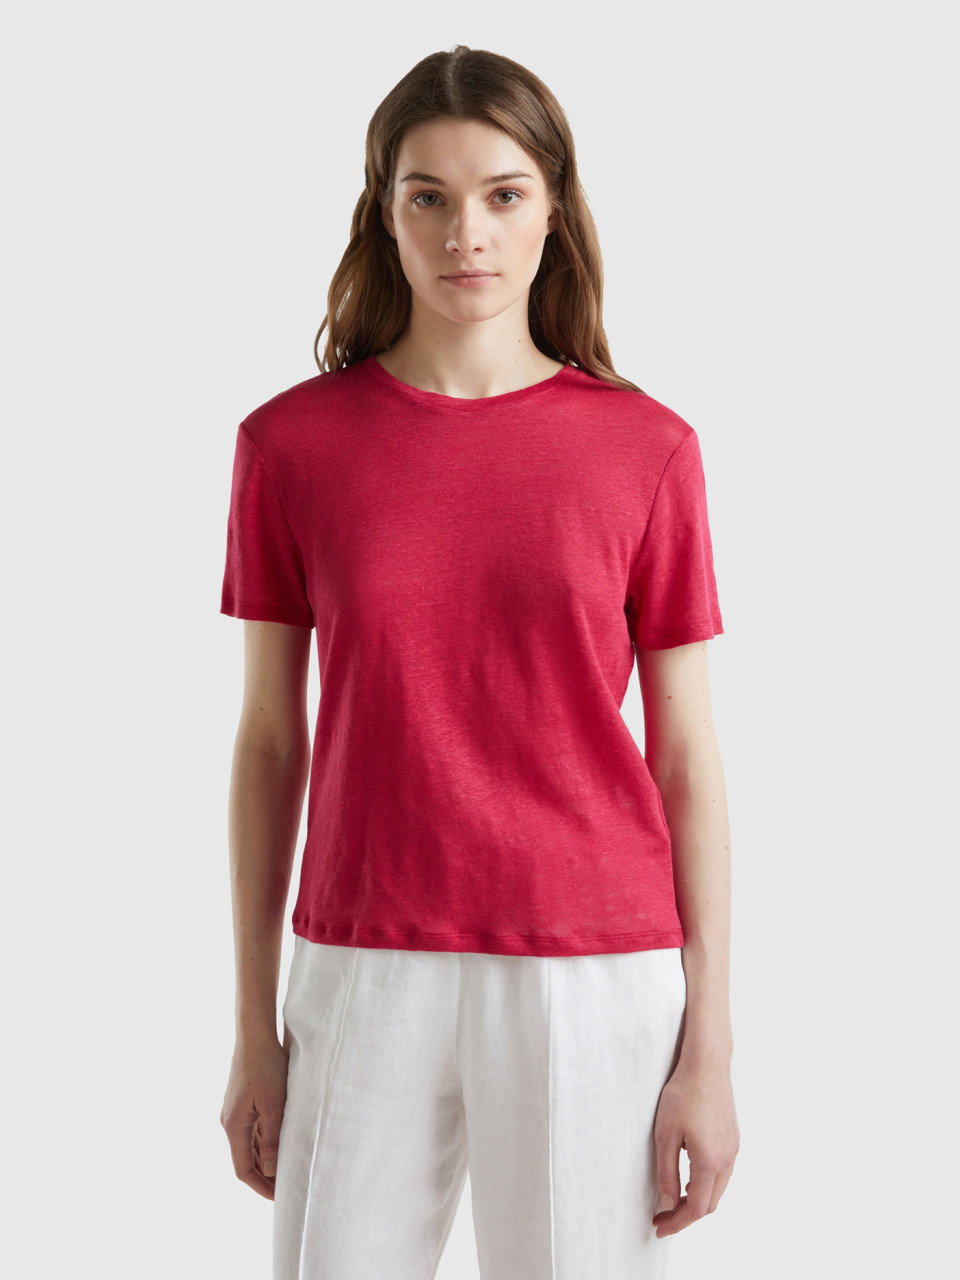 Benetton, Camiseta De Lino Puro Con Cuello Redondo, Ciclamen, Mujer